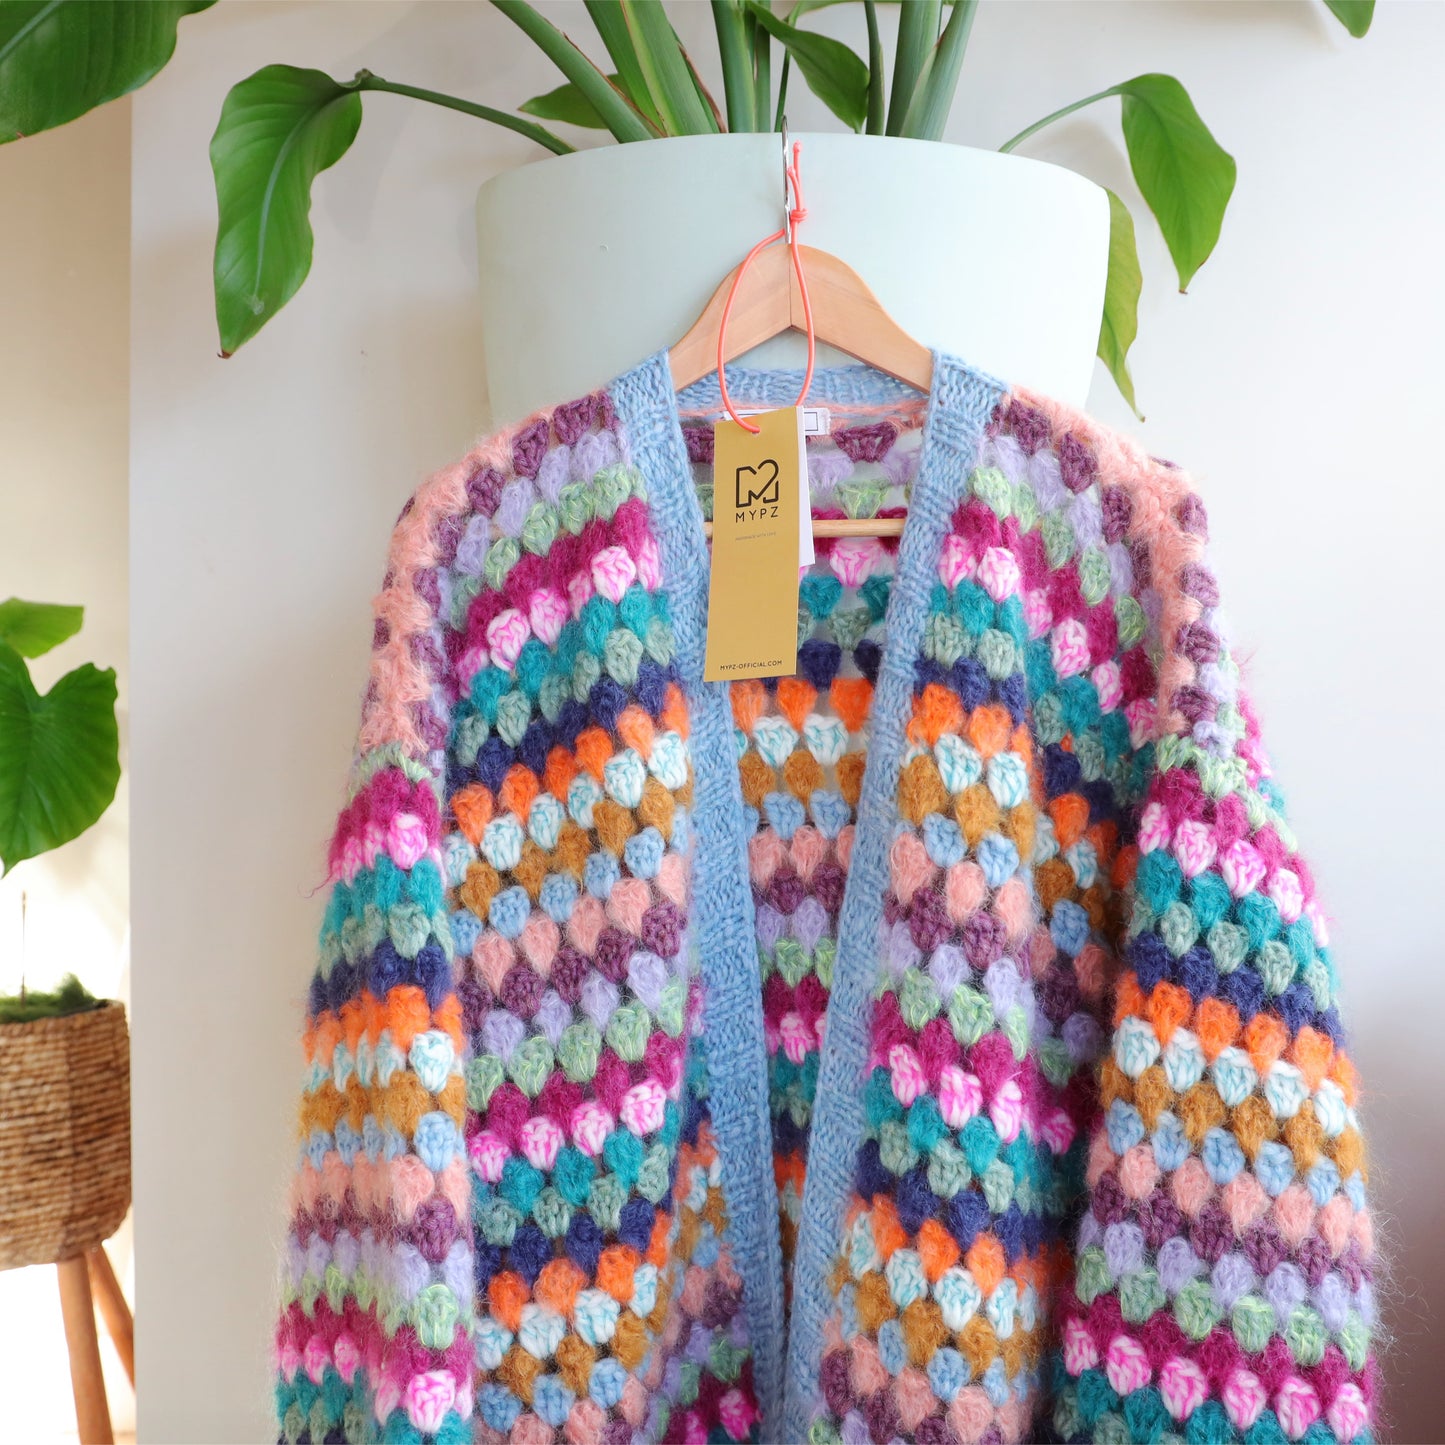 Crochet pattern - MYPZ Mohair Granny stripes cardigan Belly (ENG-NL)